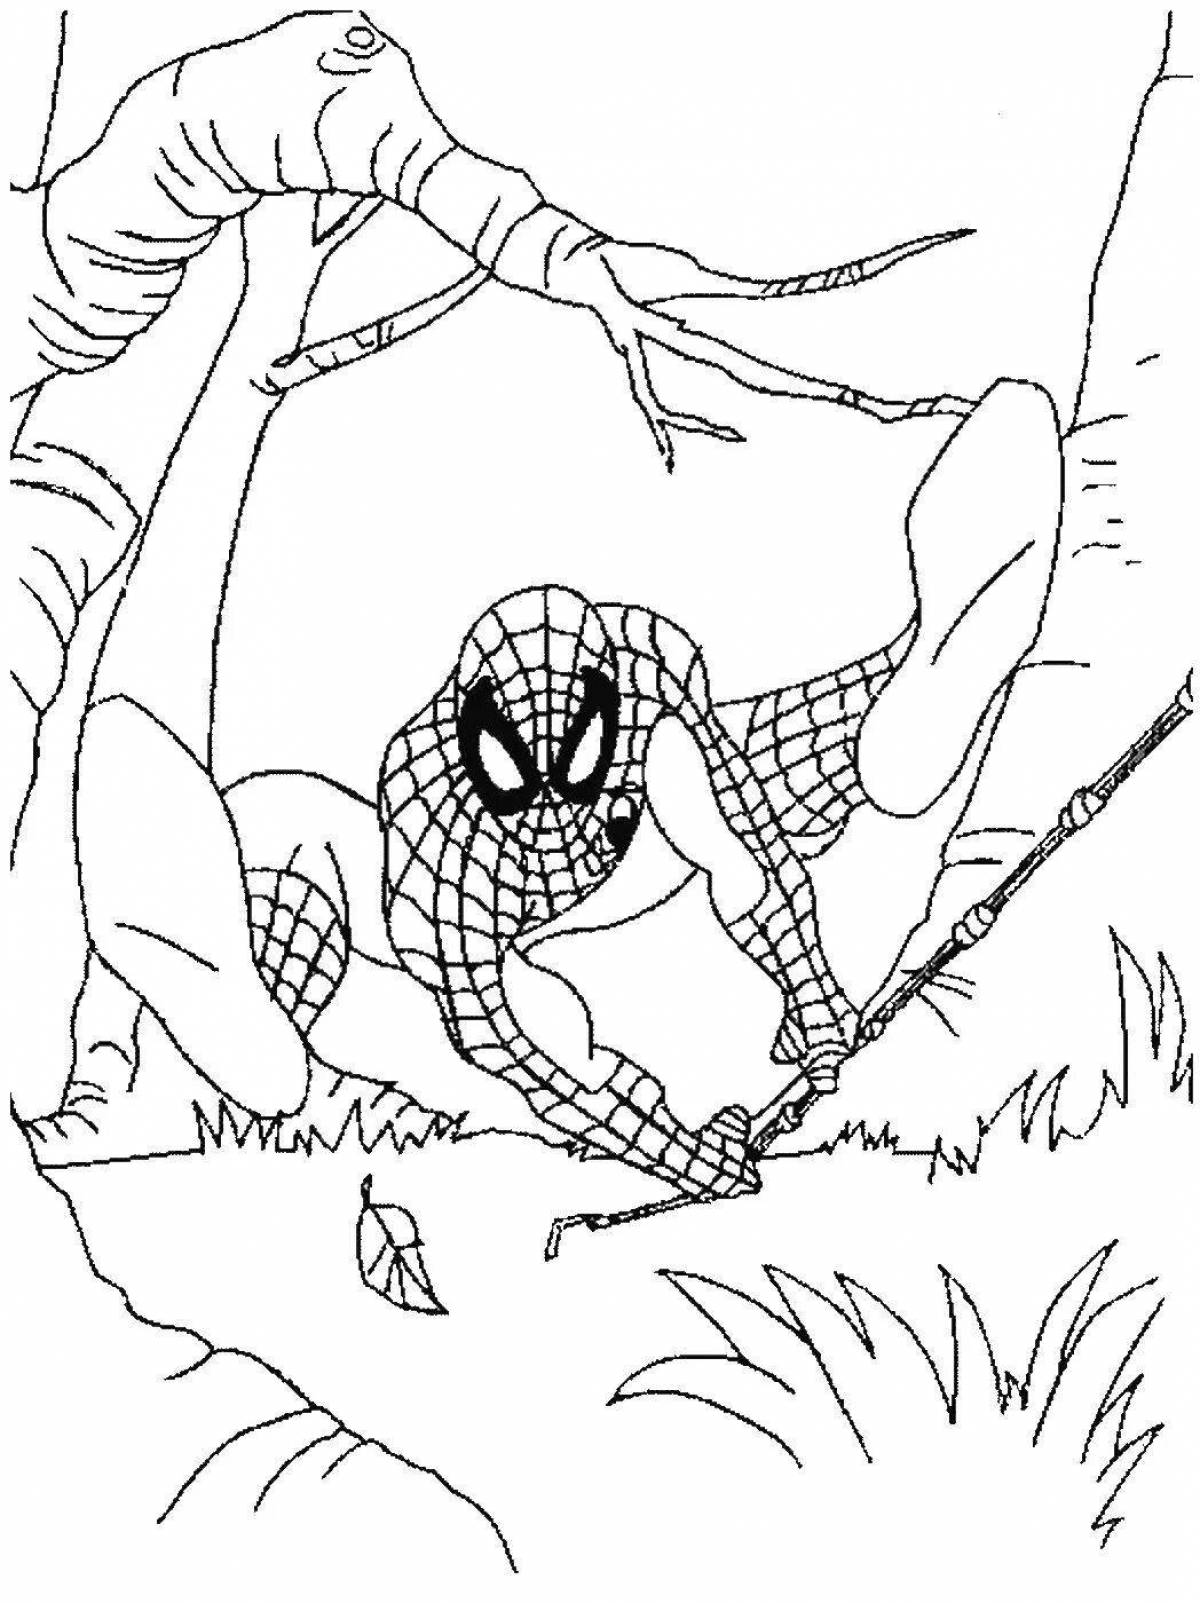 Потрясающая мультяшная раскраска человека-паука